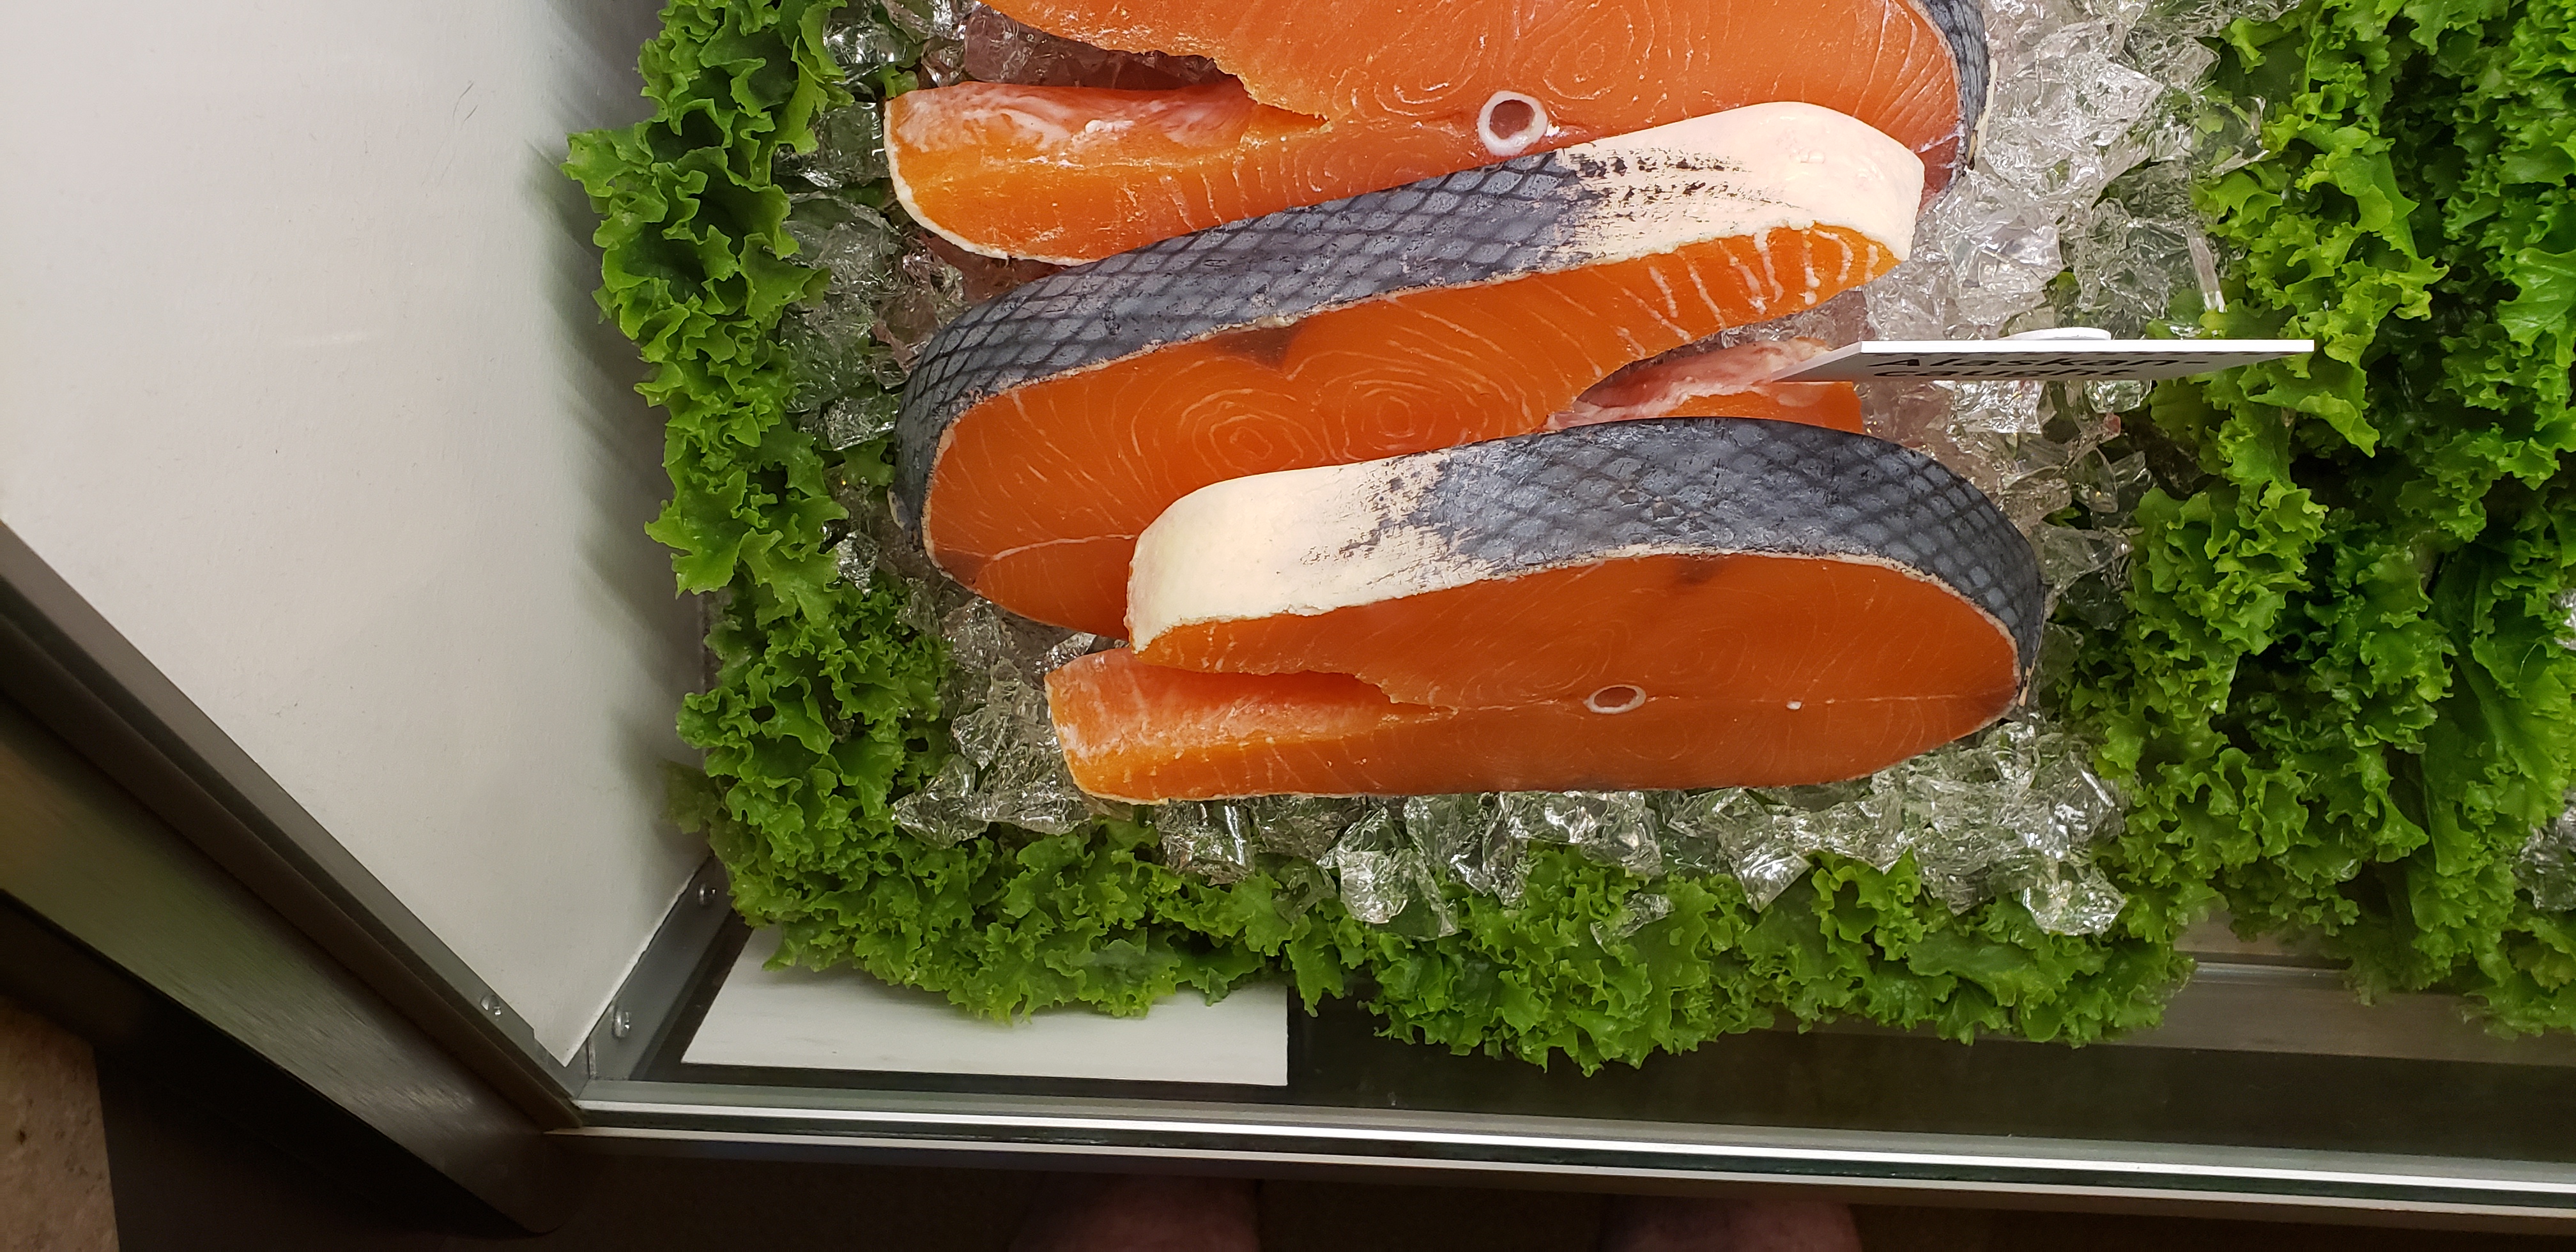 Fake salmon